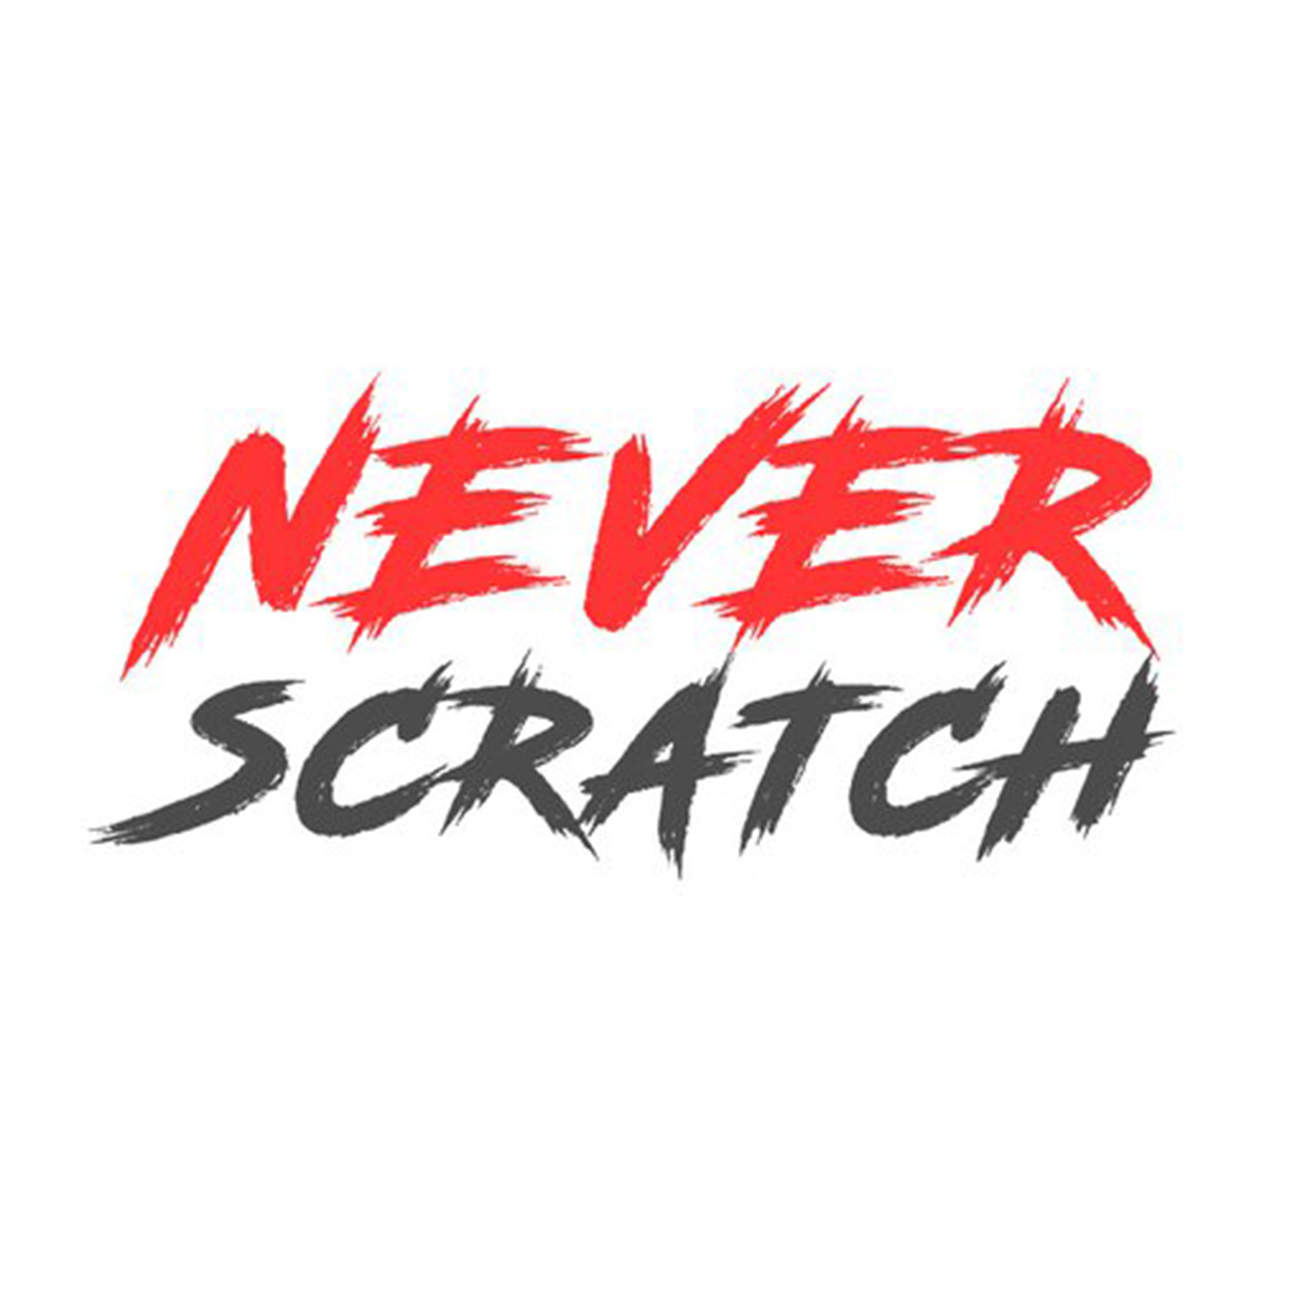 Защита лобового стекла от сколов Never Scratch WPF 1.22